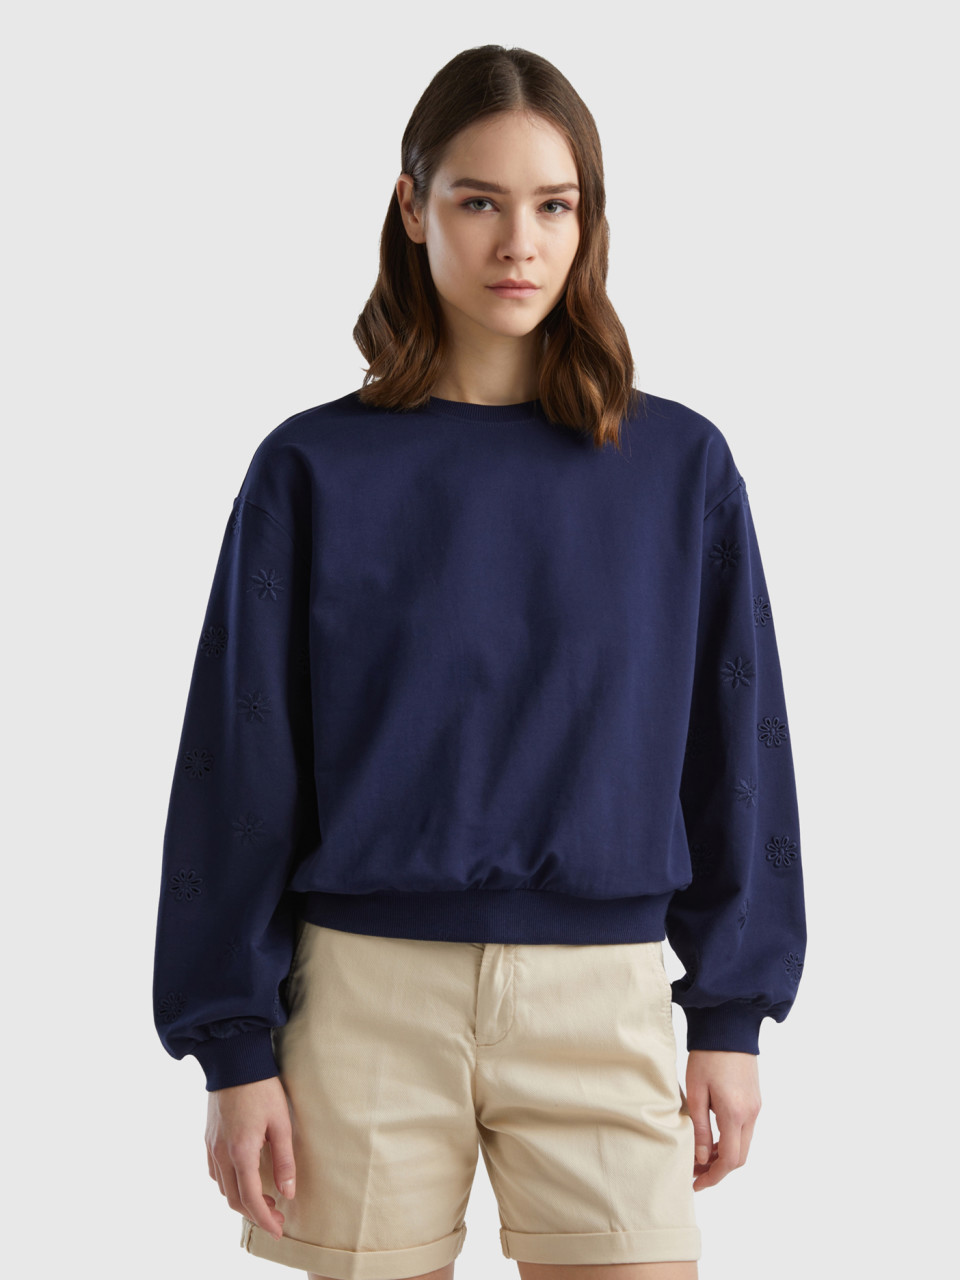 Benetton, Sweatshirt With Floral Embroidery, Dark Blue, Women